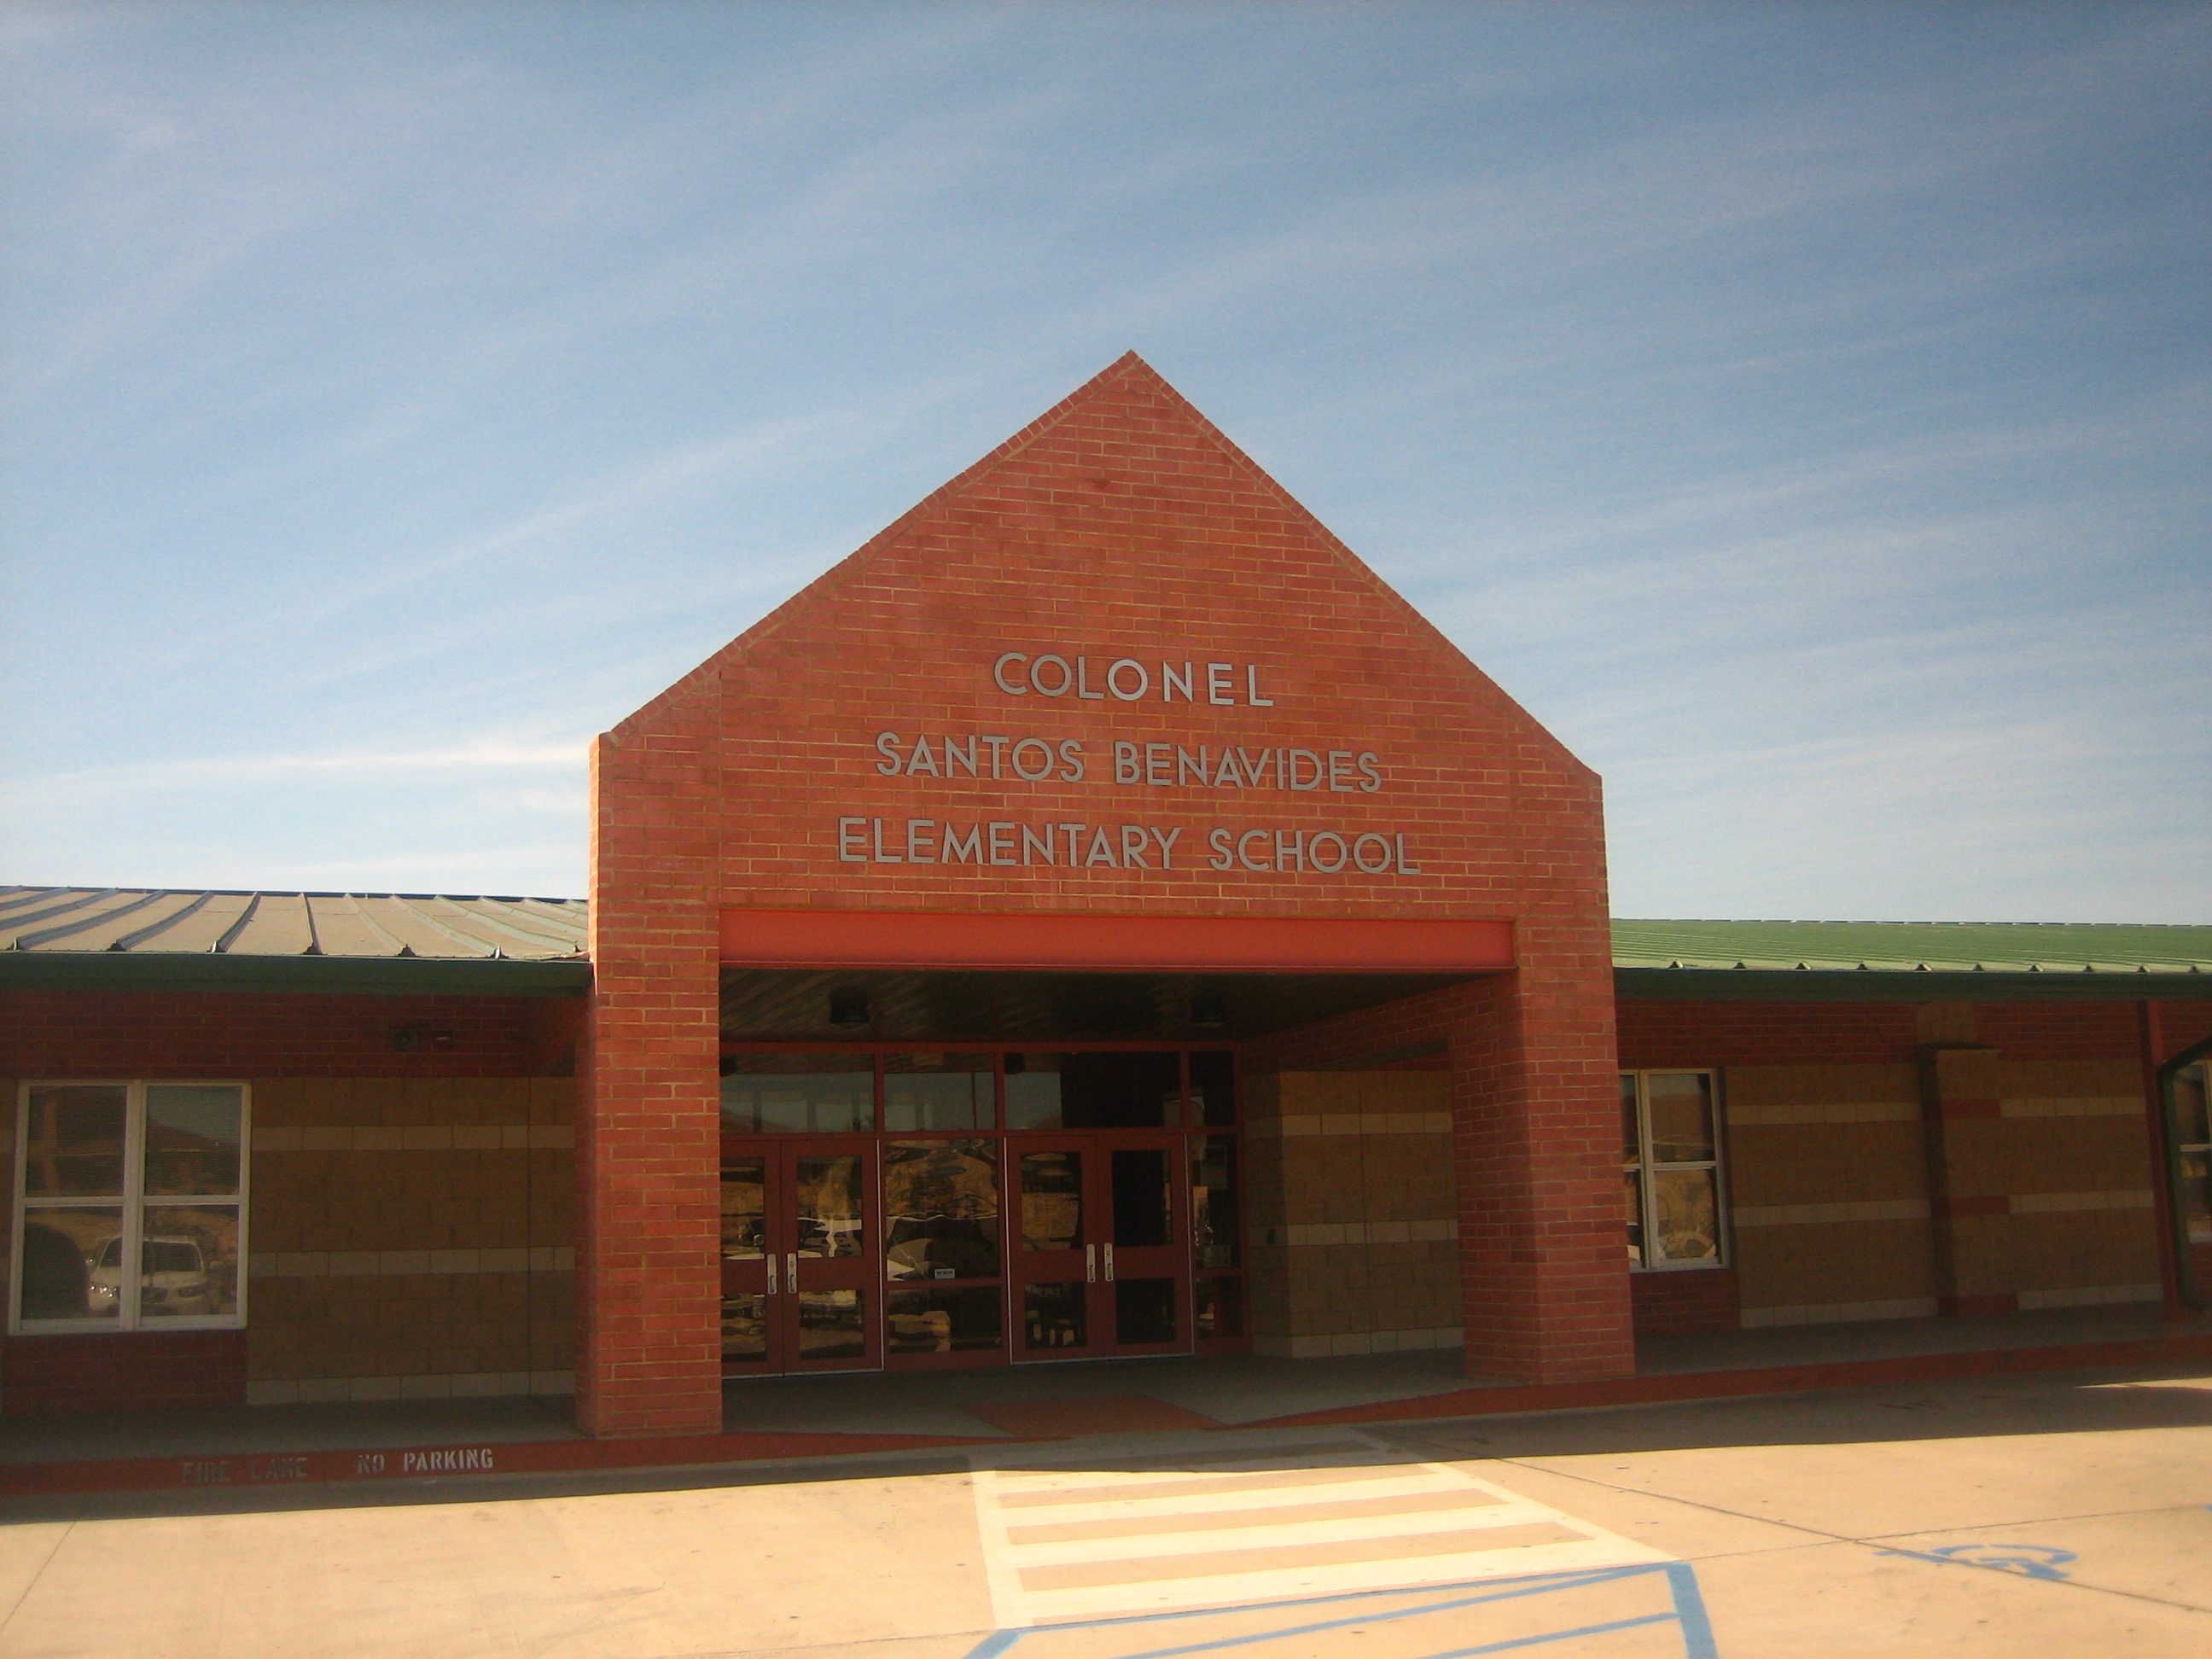 Colonel Santos Benavides Elementary School in Laredo, TX IMG 1827.JPG. en:u...